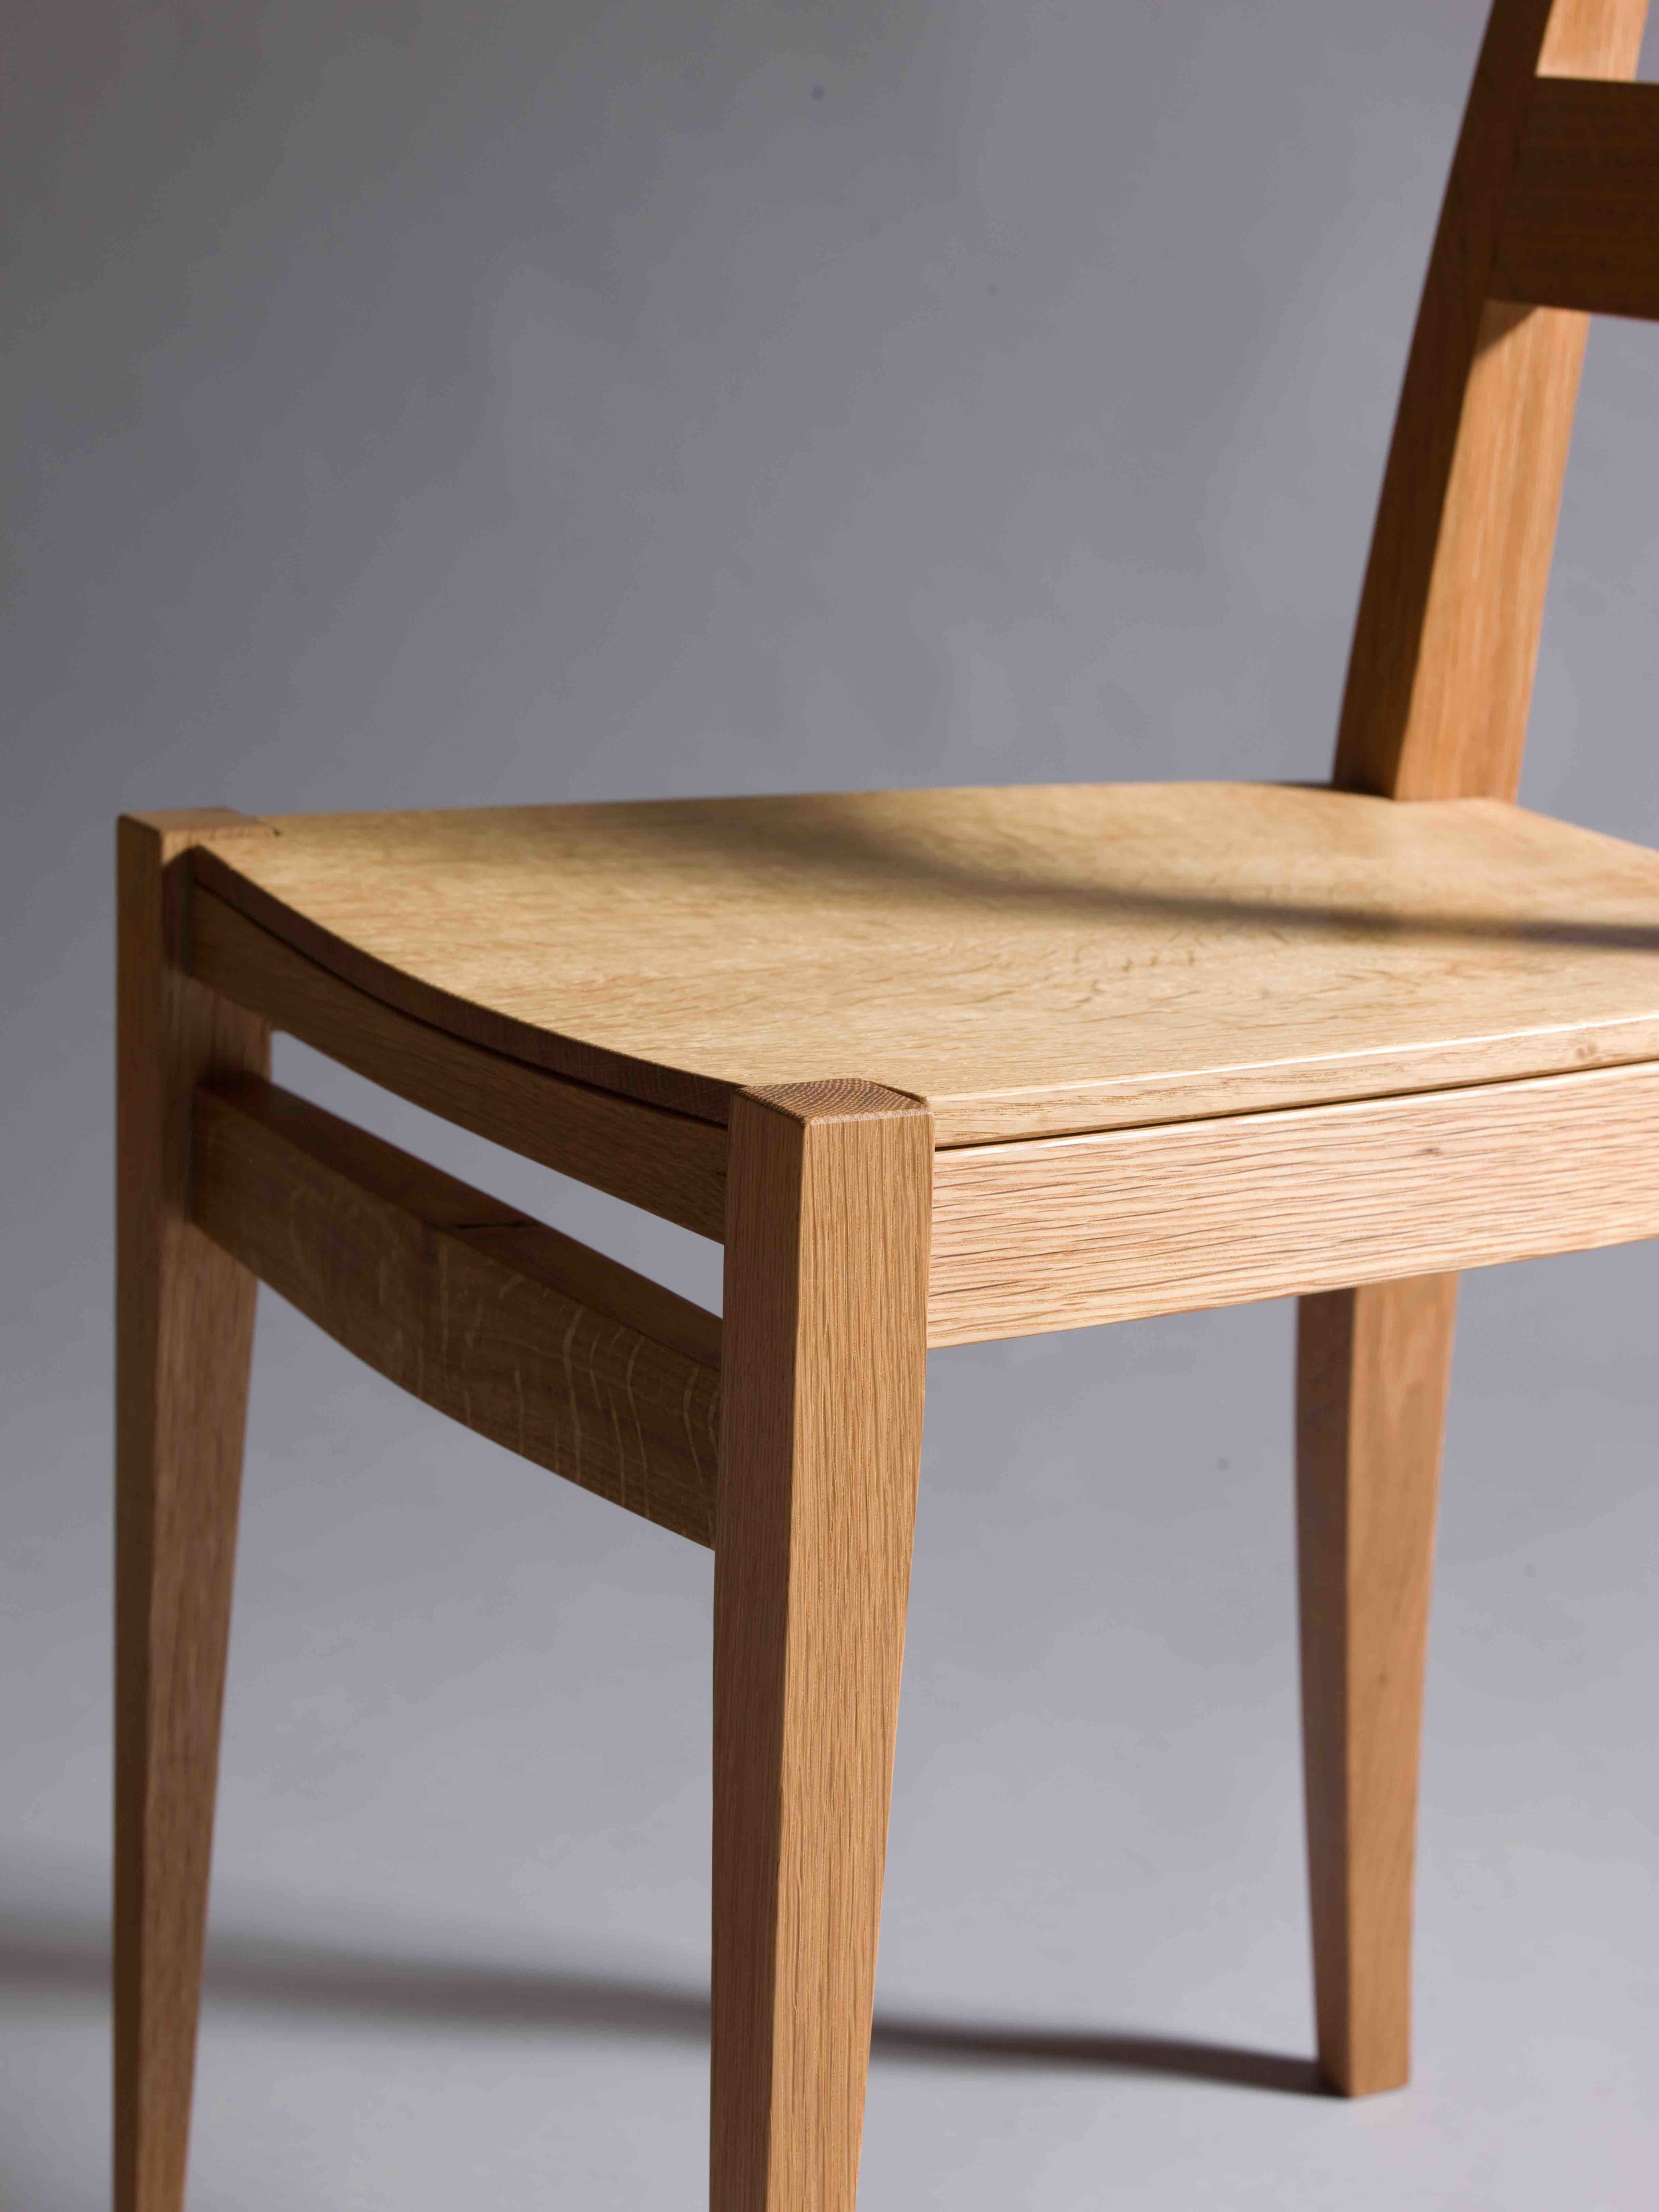 Oak Chair6 copy.jpg